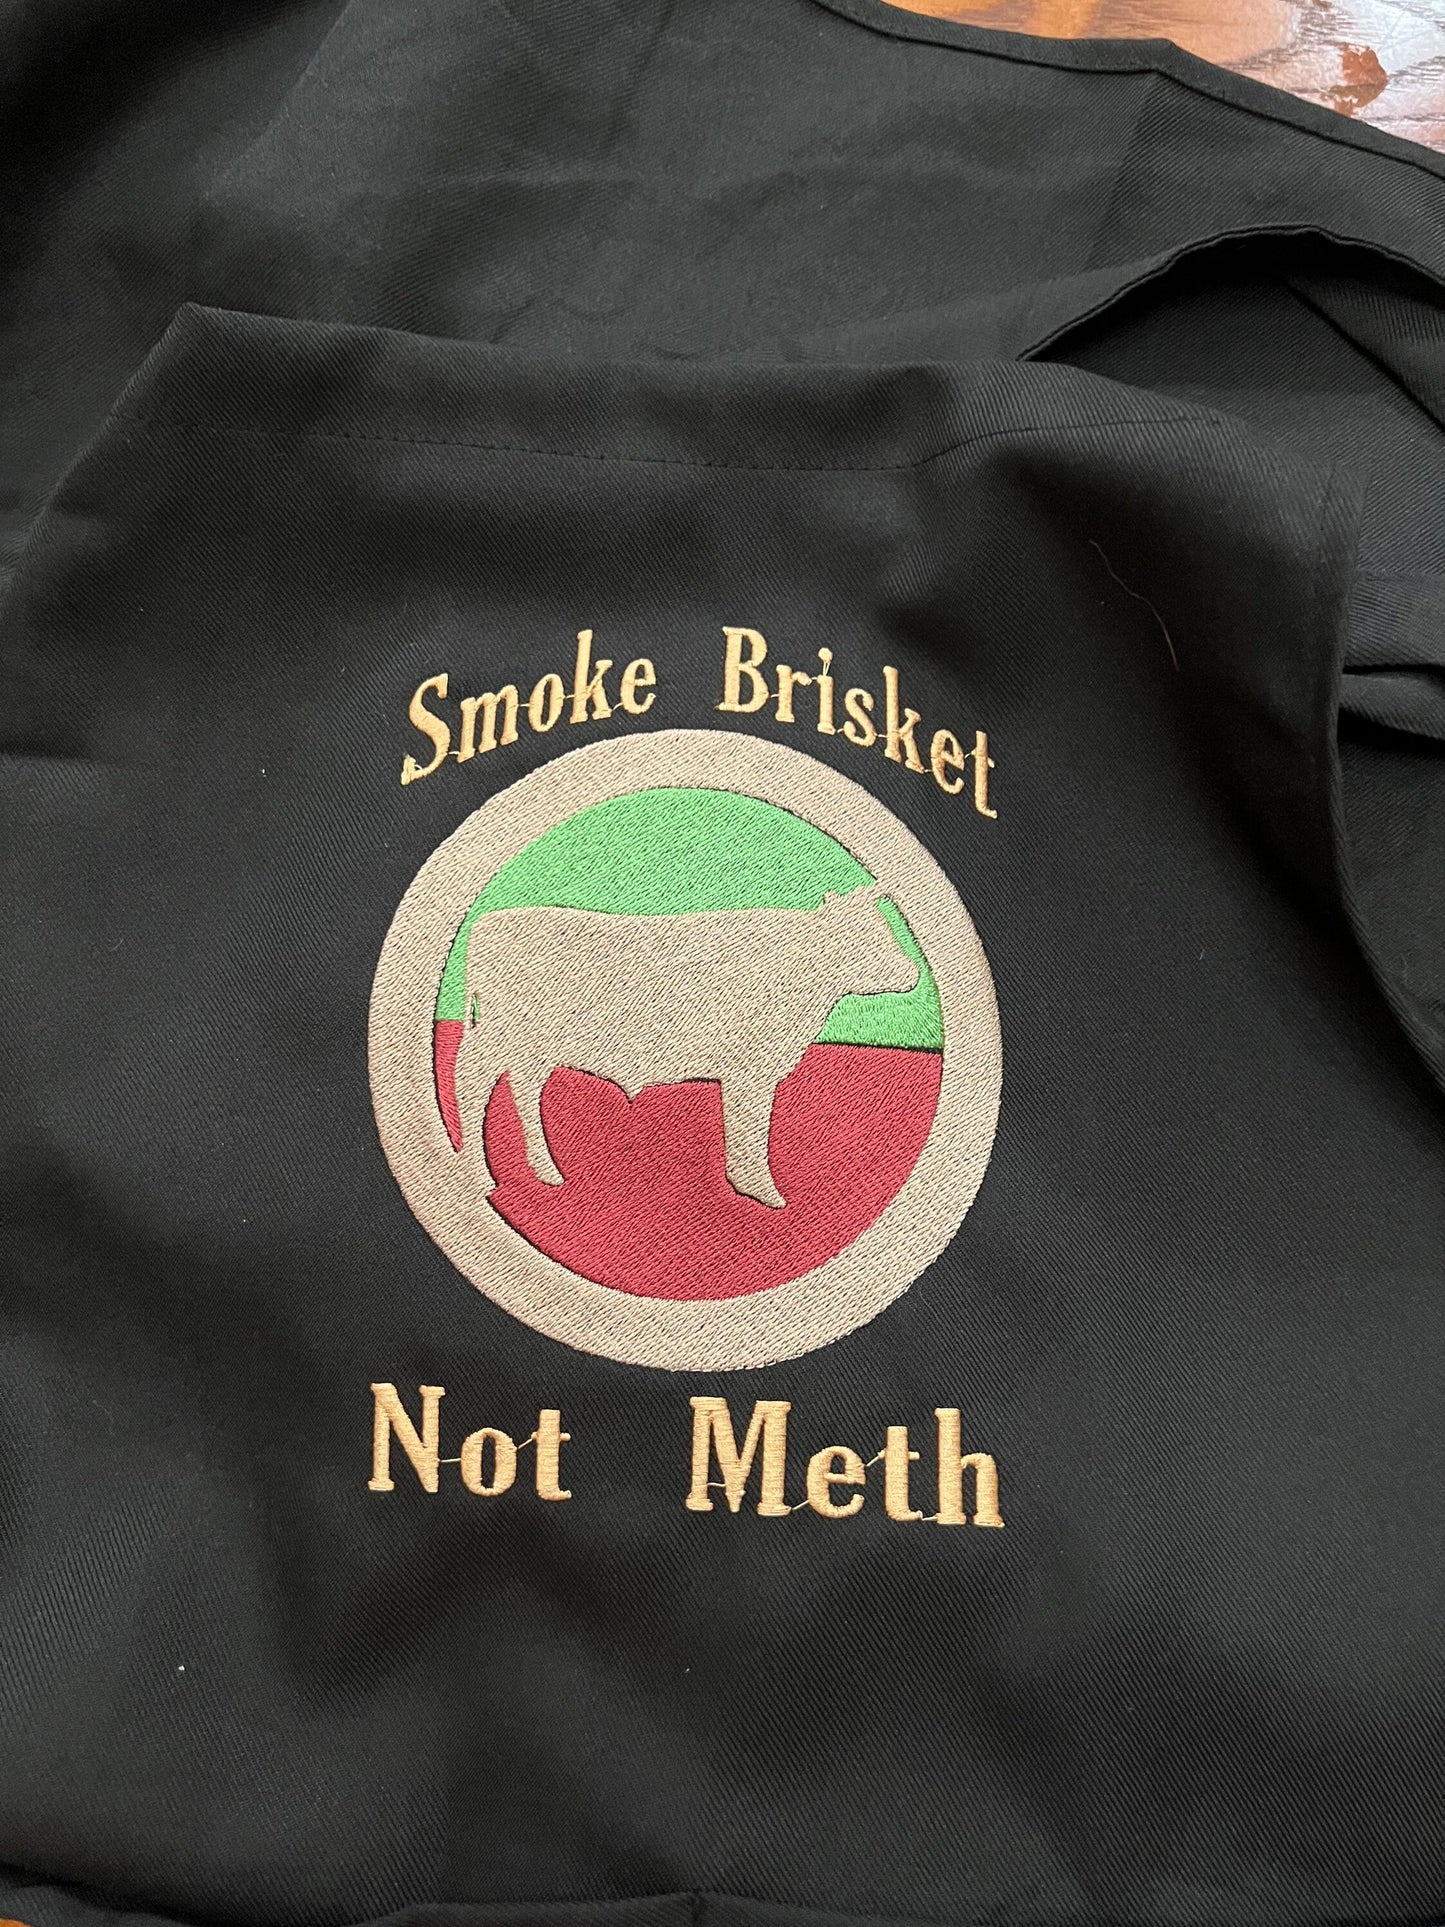 Grilling Apron, smoke brisket not meth, great bbq gift